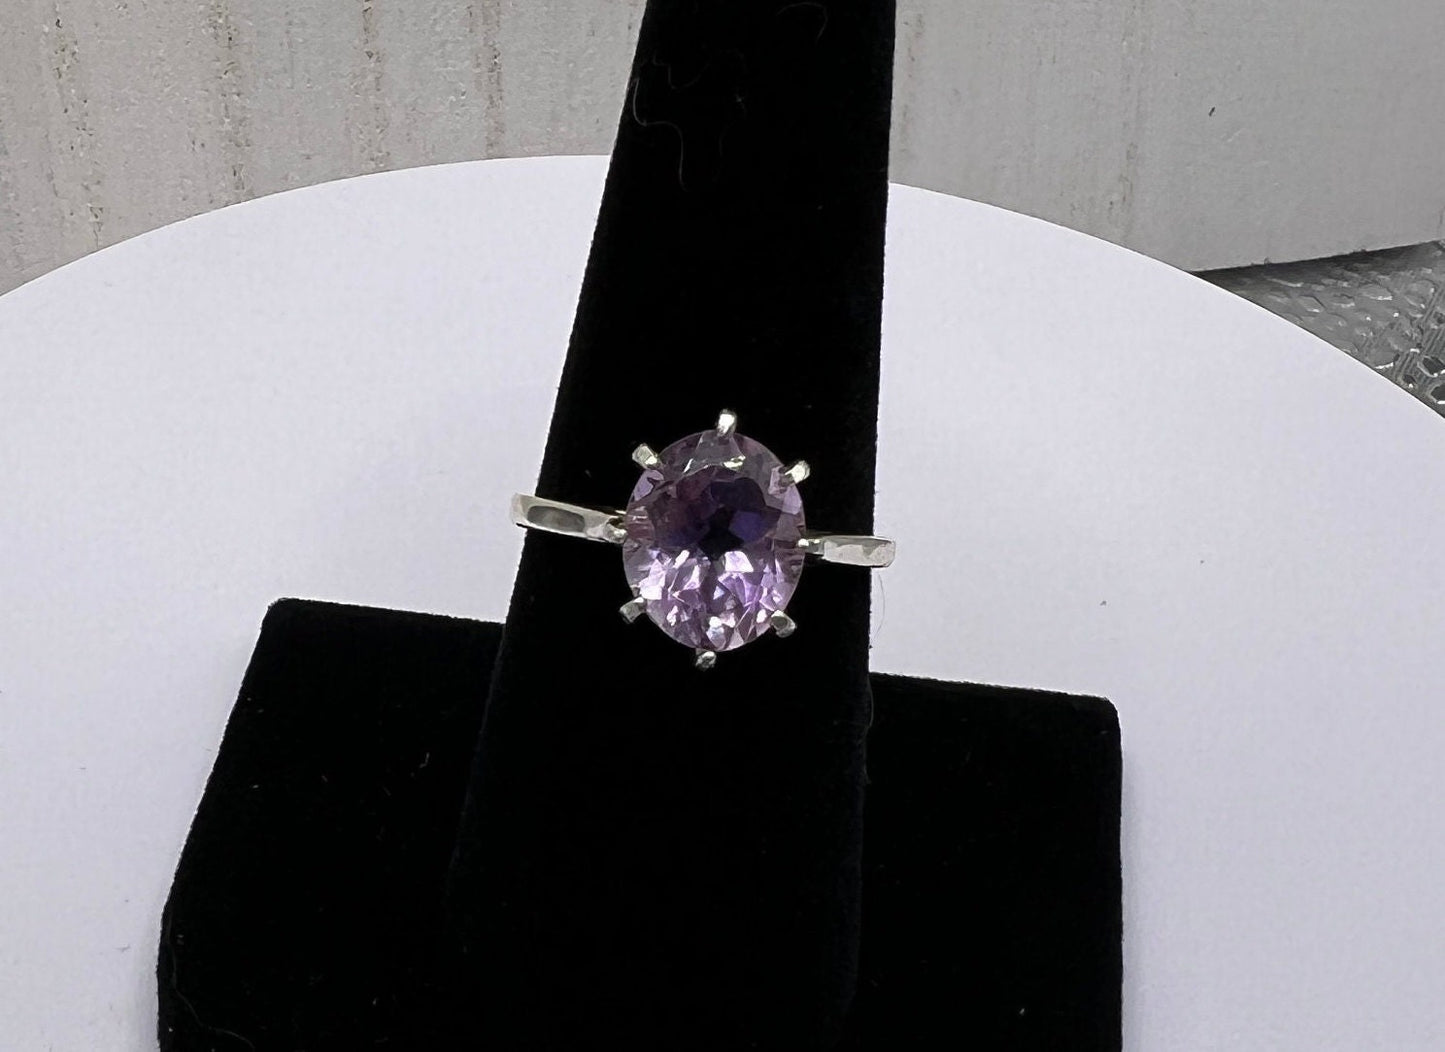 Stunning Lavender Purple Oval Amethyst Ring (Size 7.5)